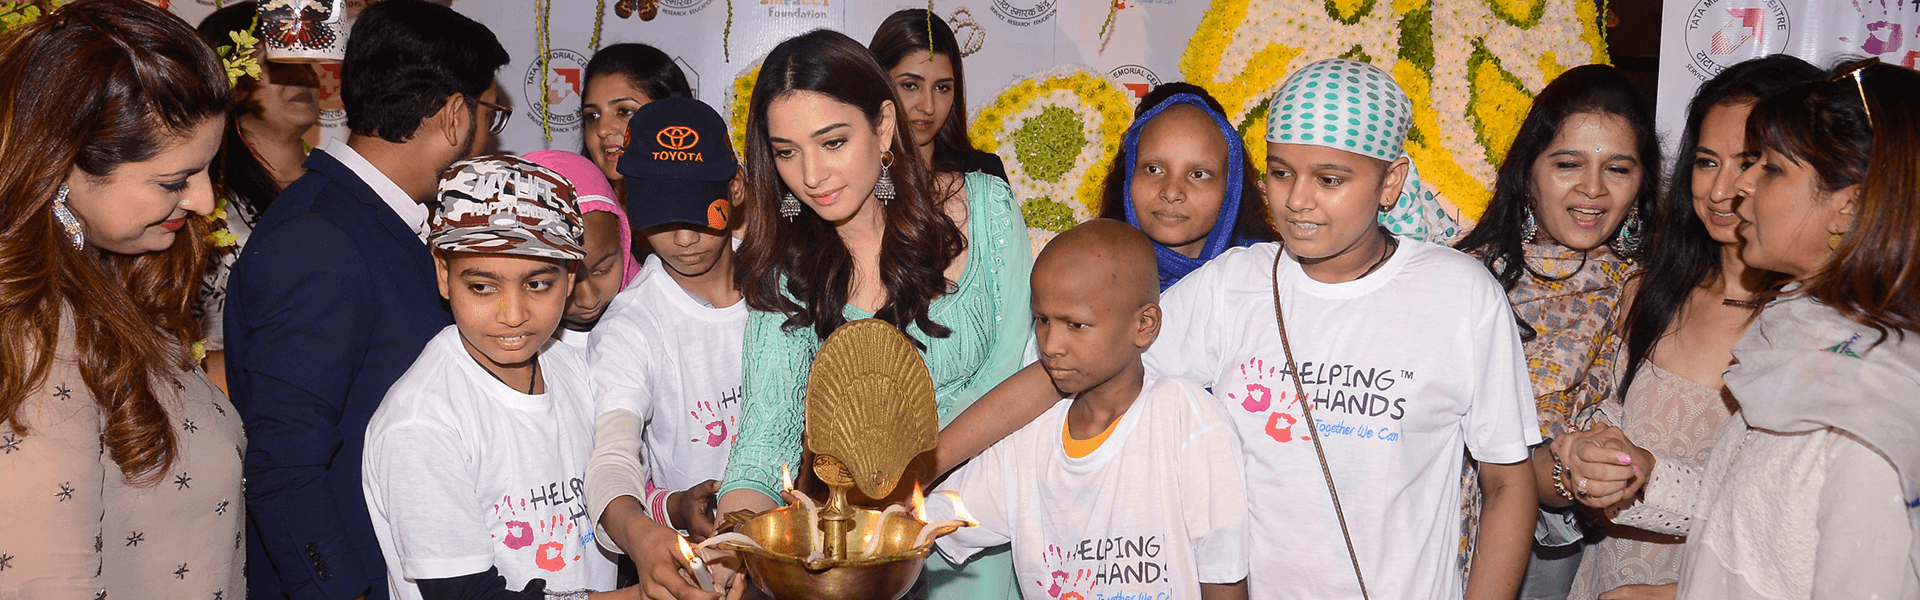 Helping Hands Foundation tamannah bhatia